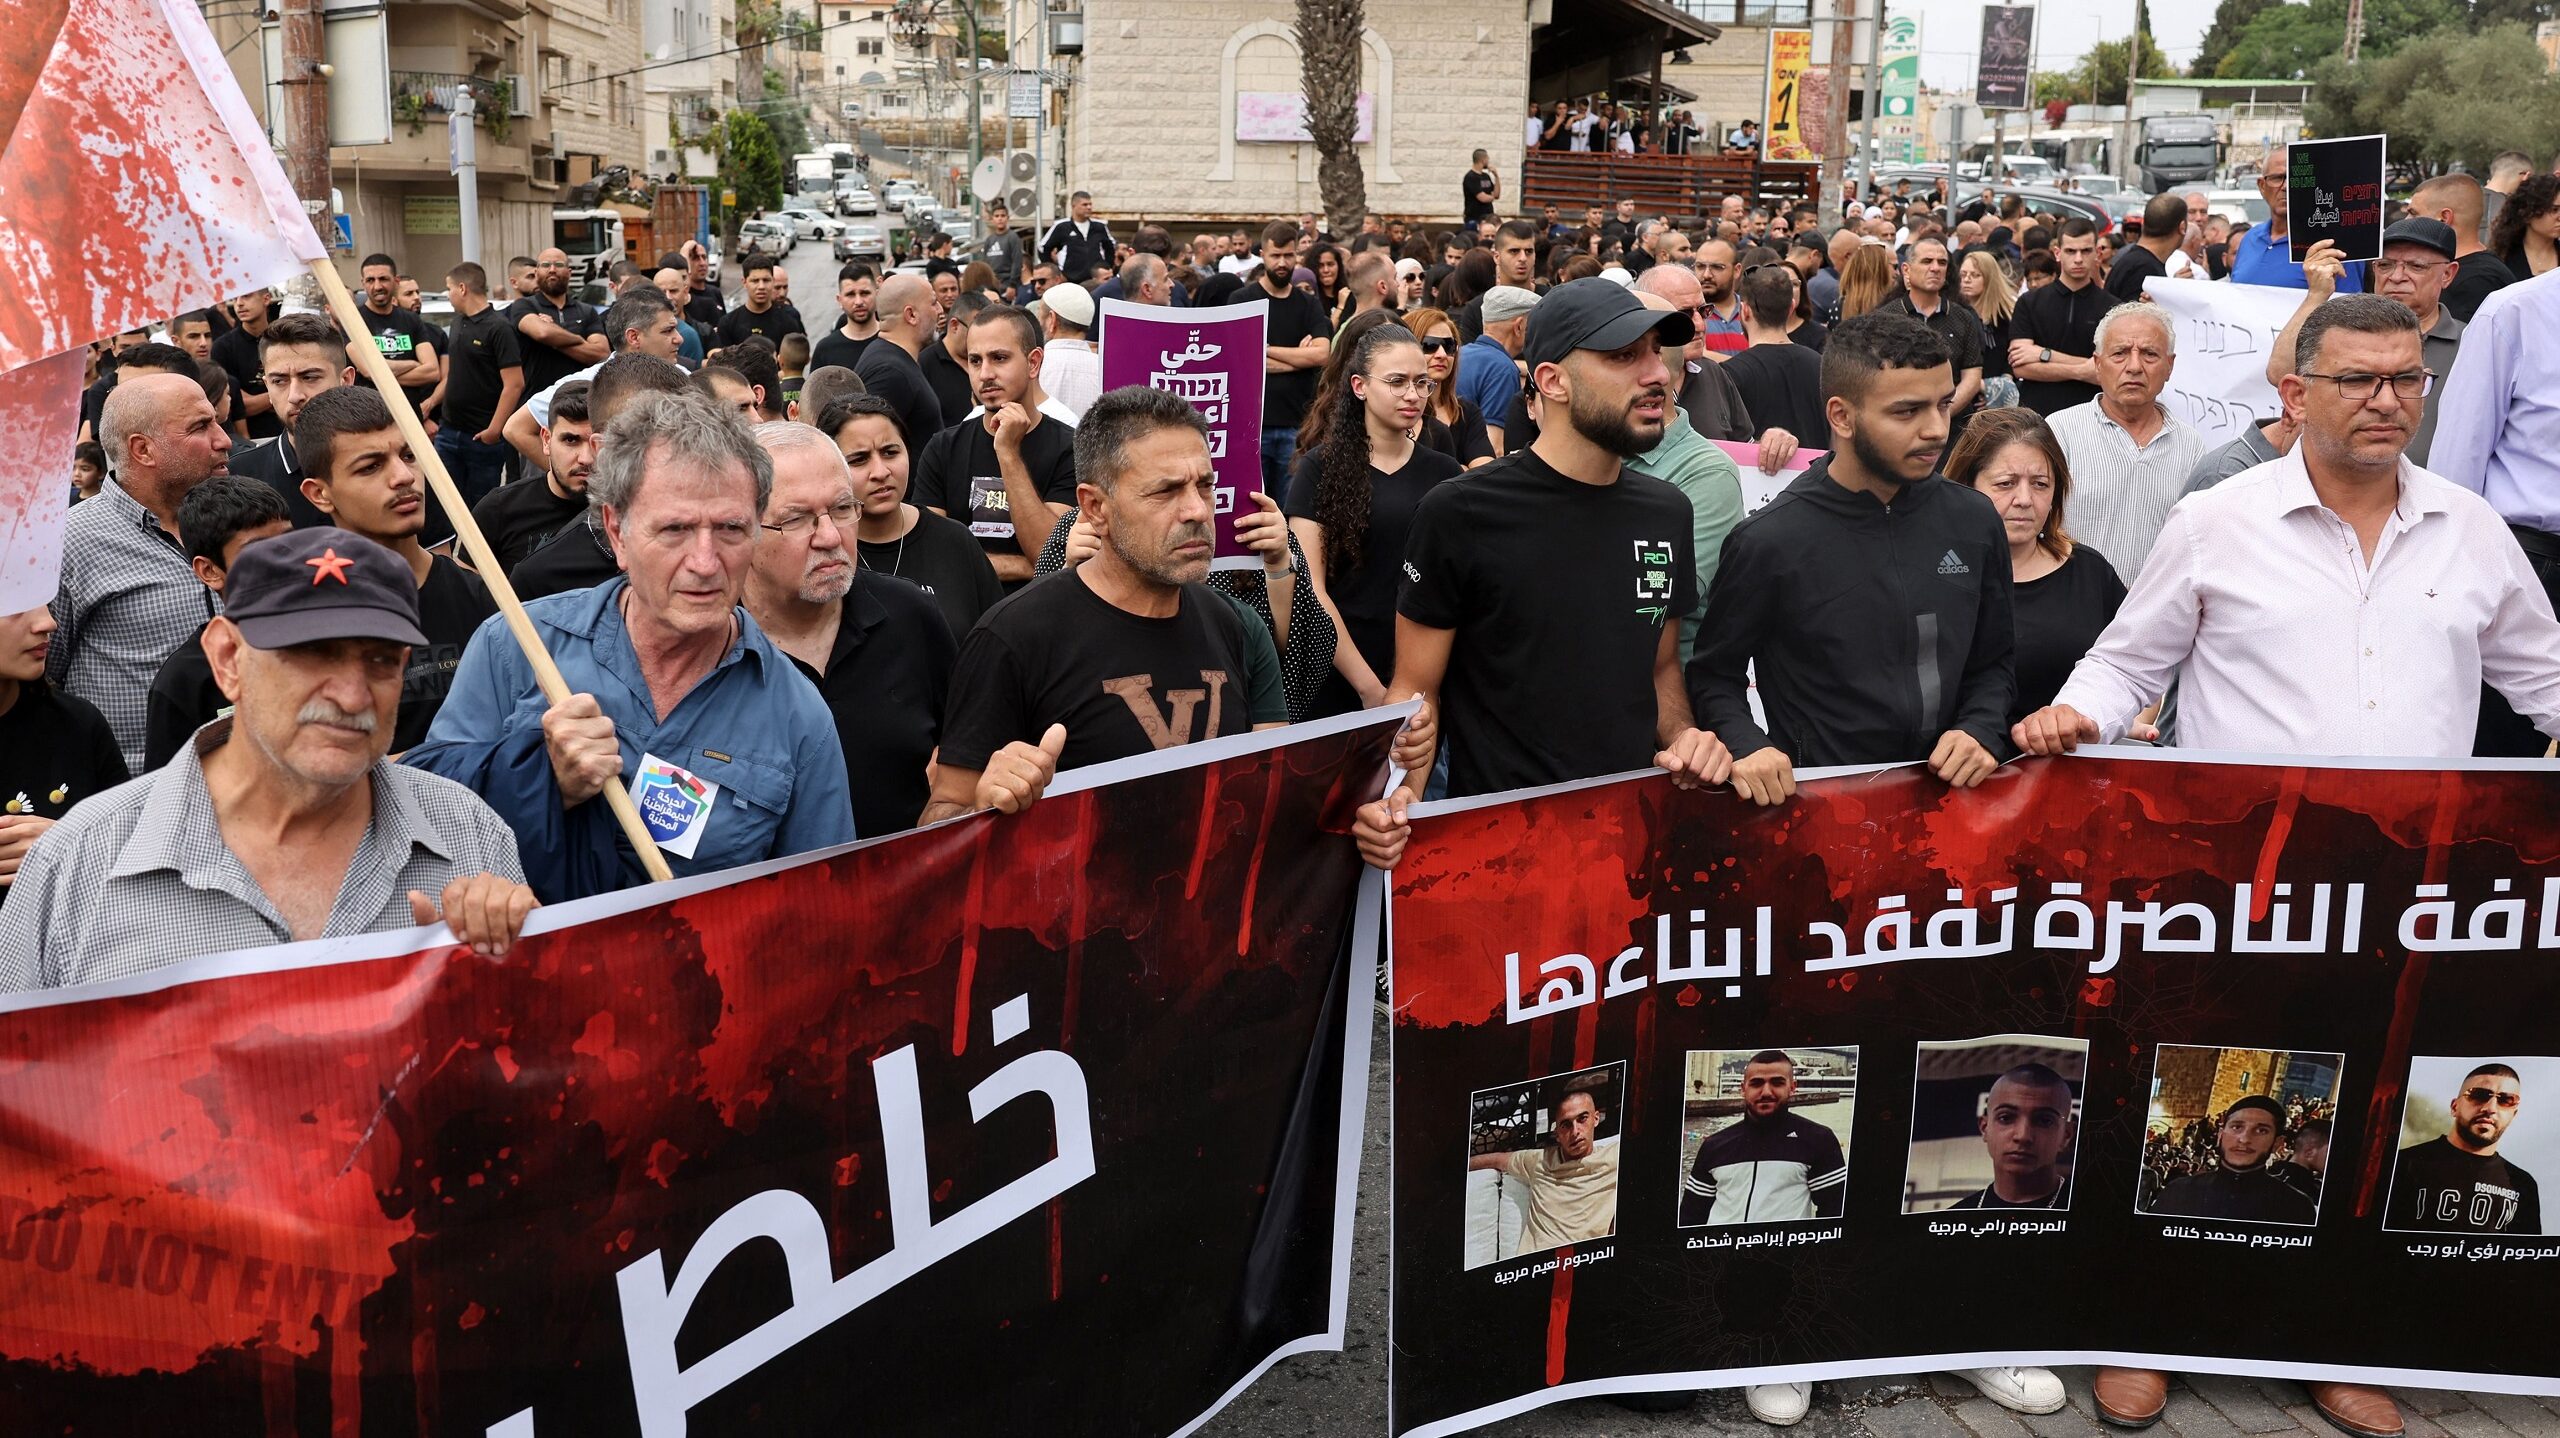 As Violence in Arab Israeli Communities Soars, Trust in Police Dwindles